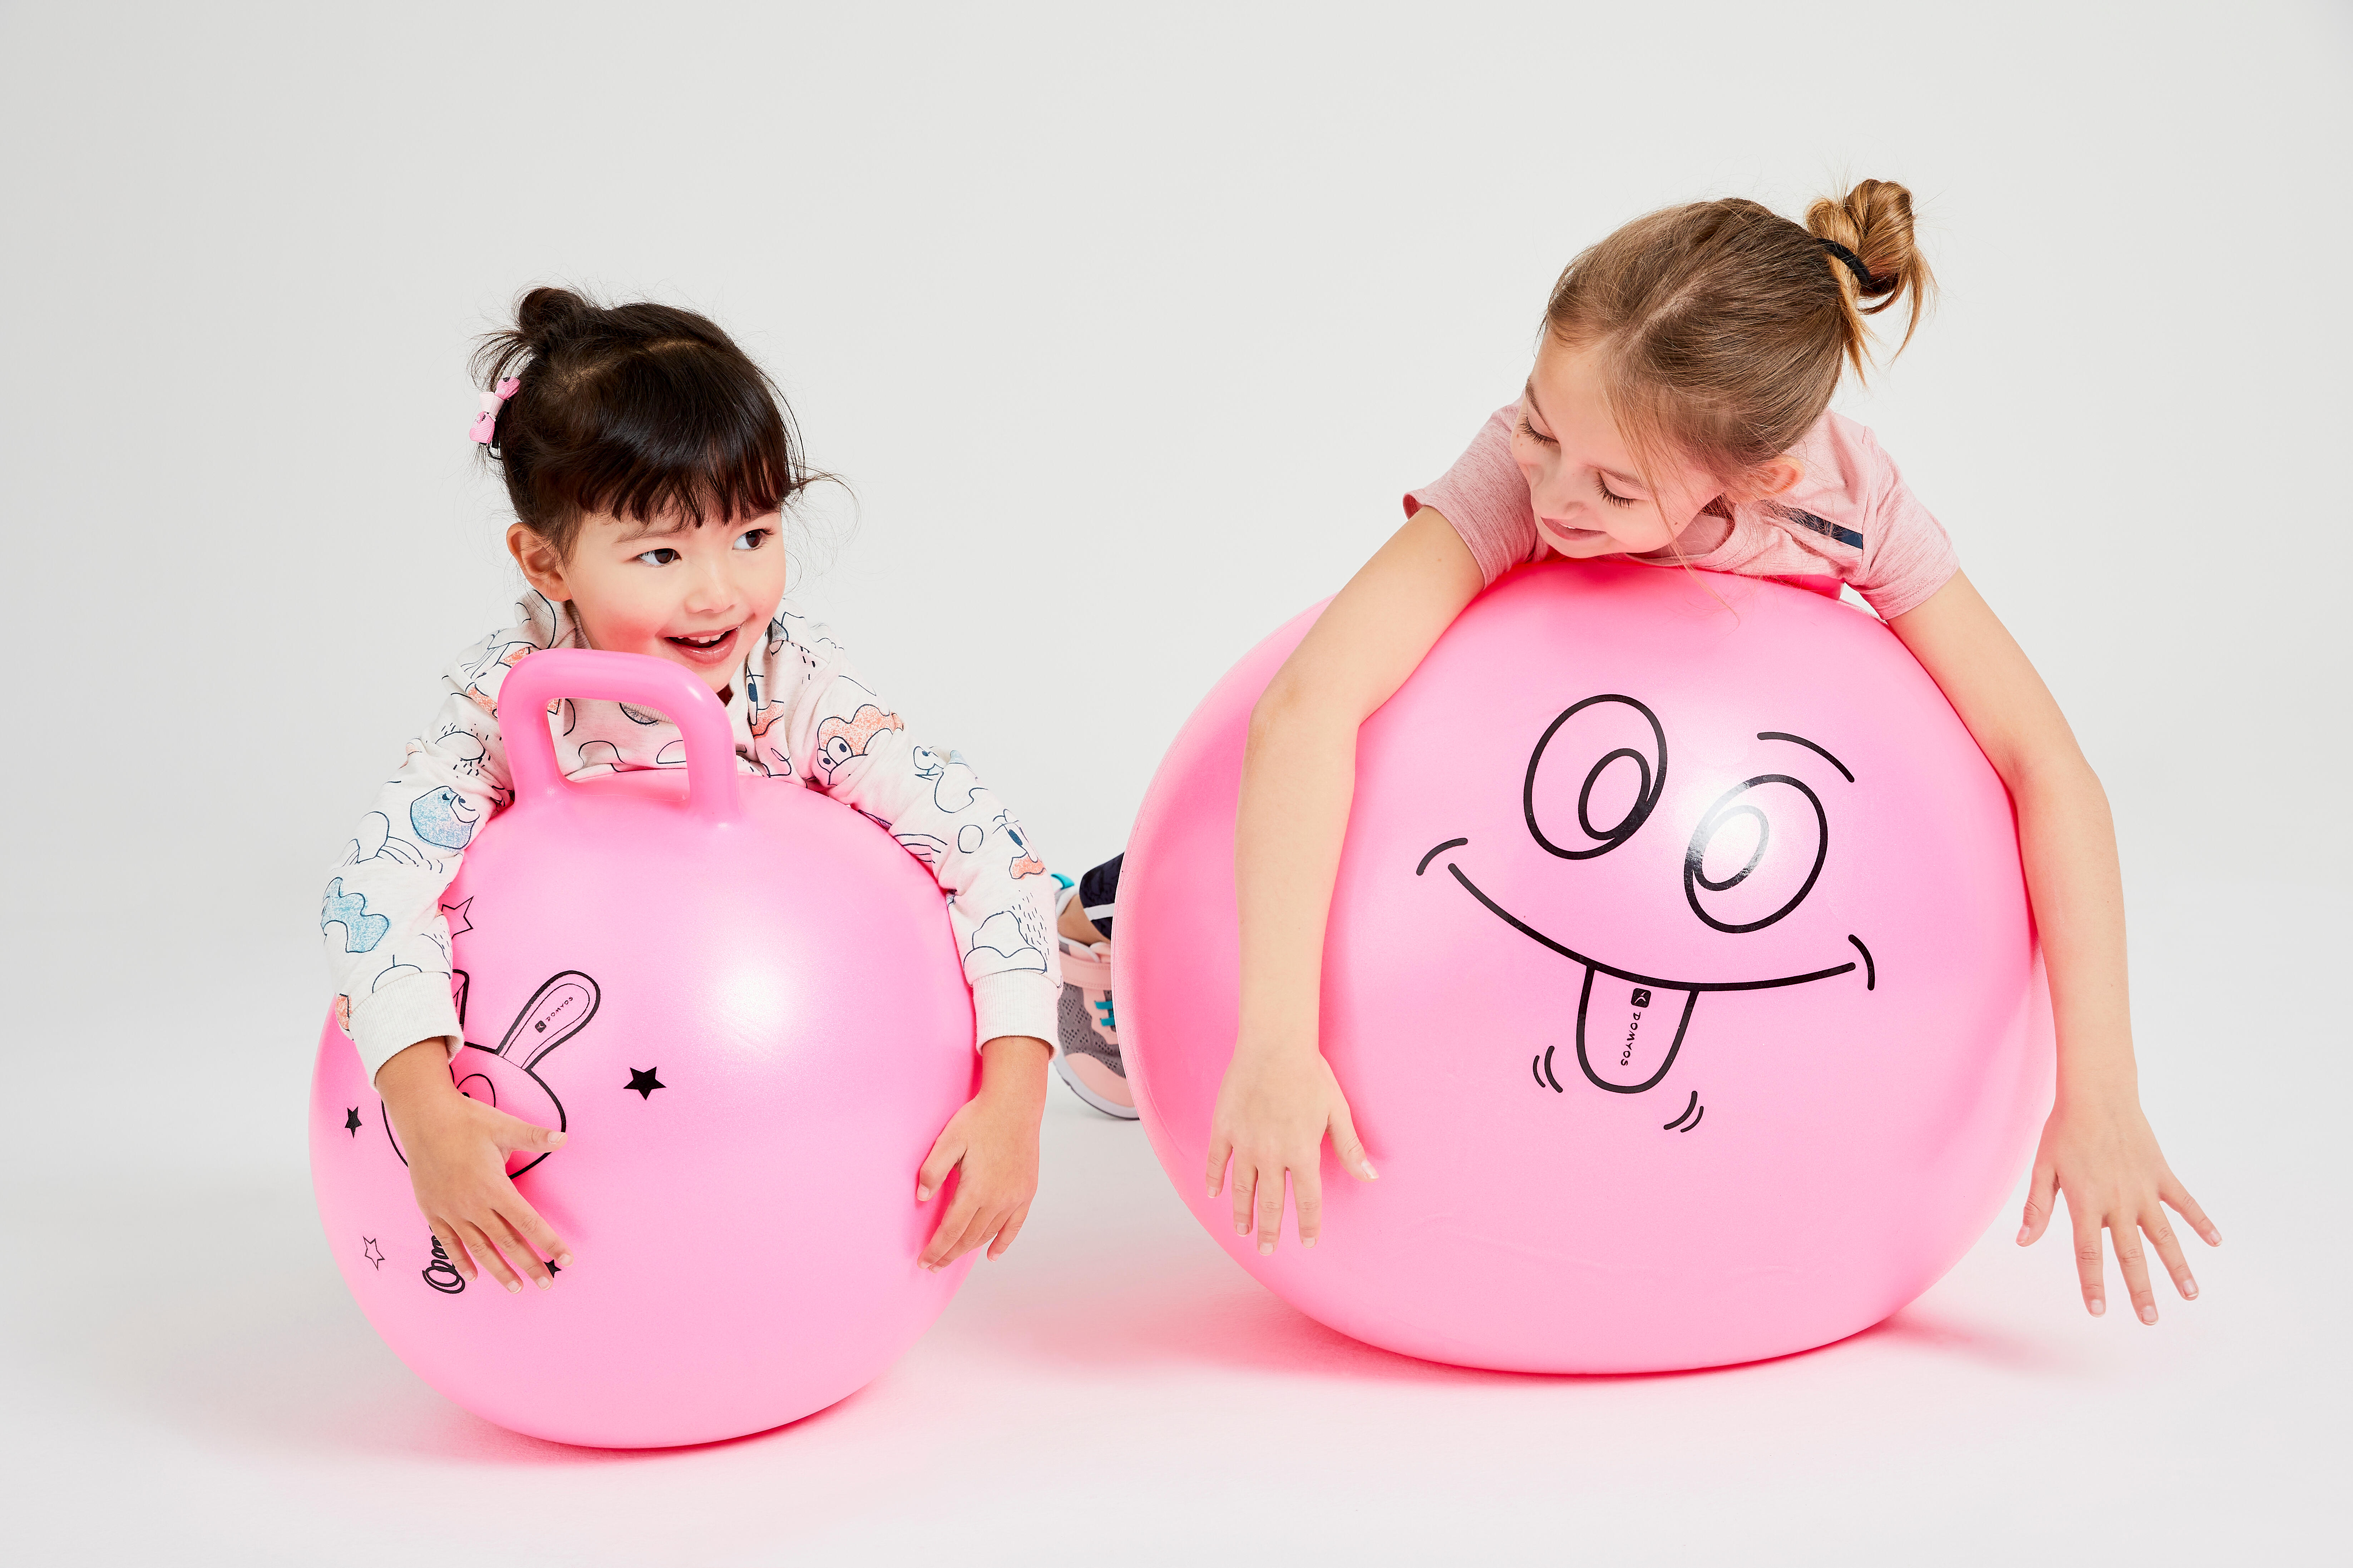 Kids’ Fitness Hopper Ball 45 cm - Pink - DOMYOS